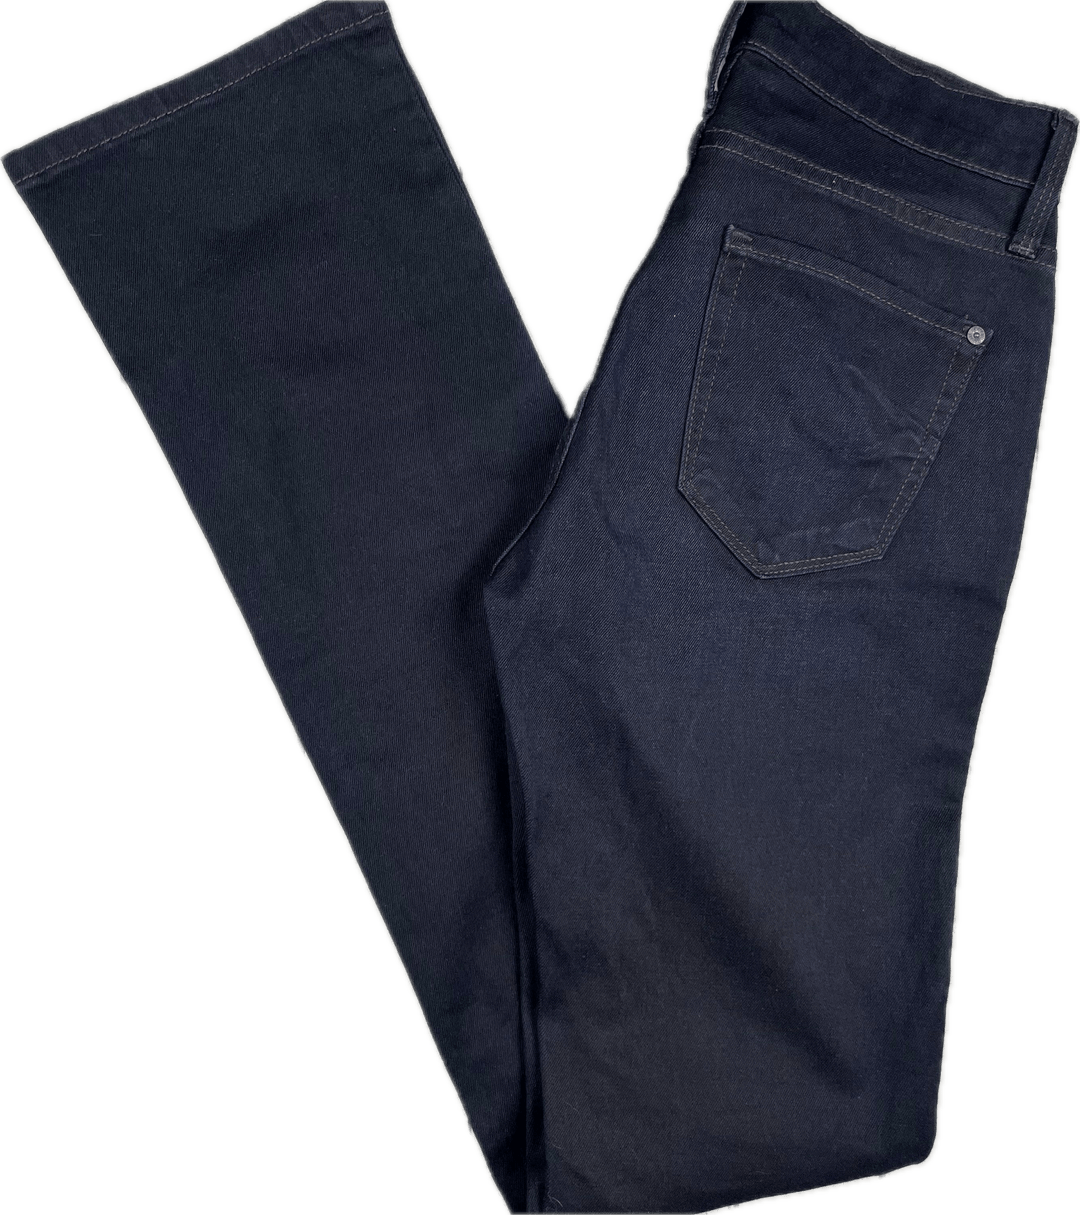 James Jeans Black 'Hunter' Stretch Denim Jeans -Size 26 - Jean Pool